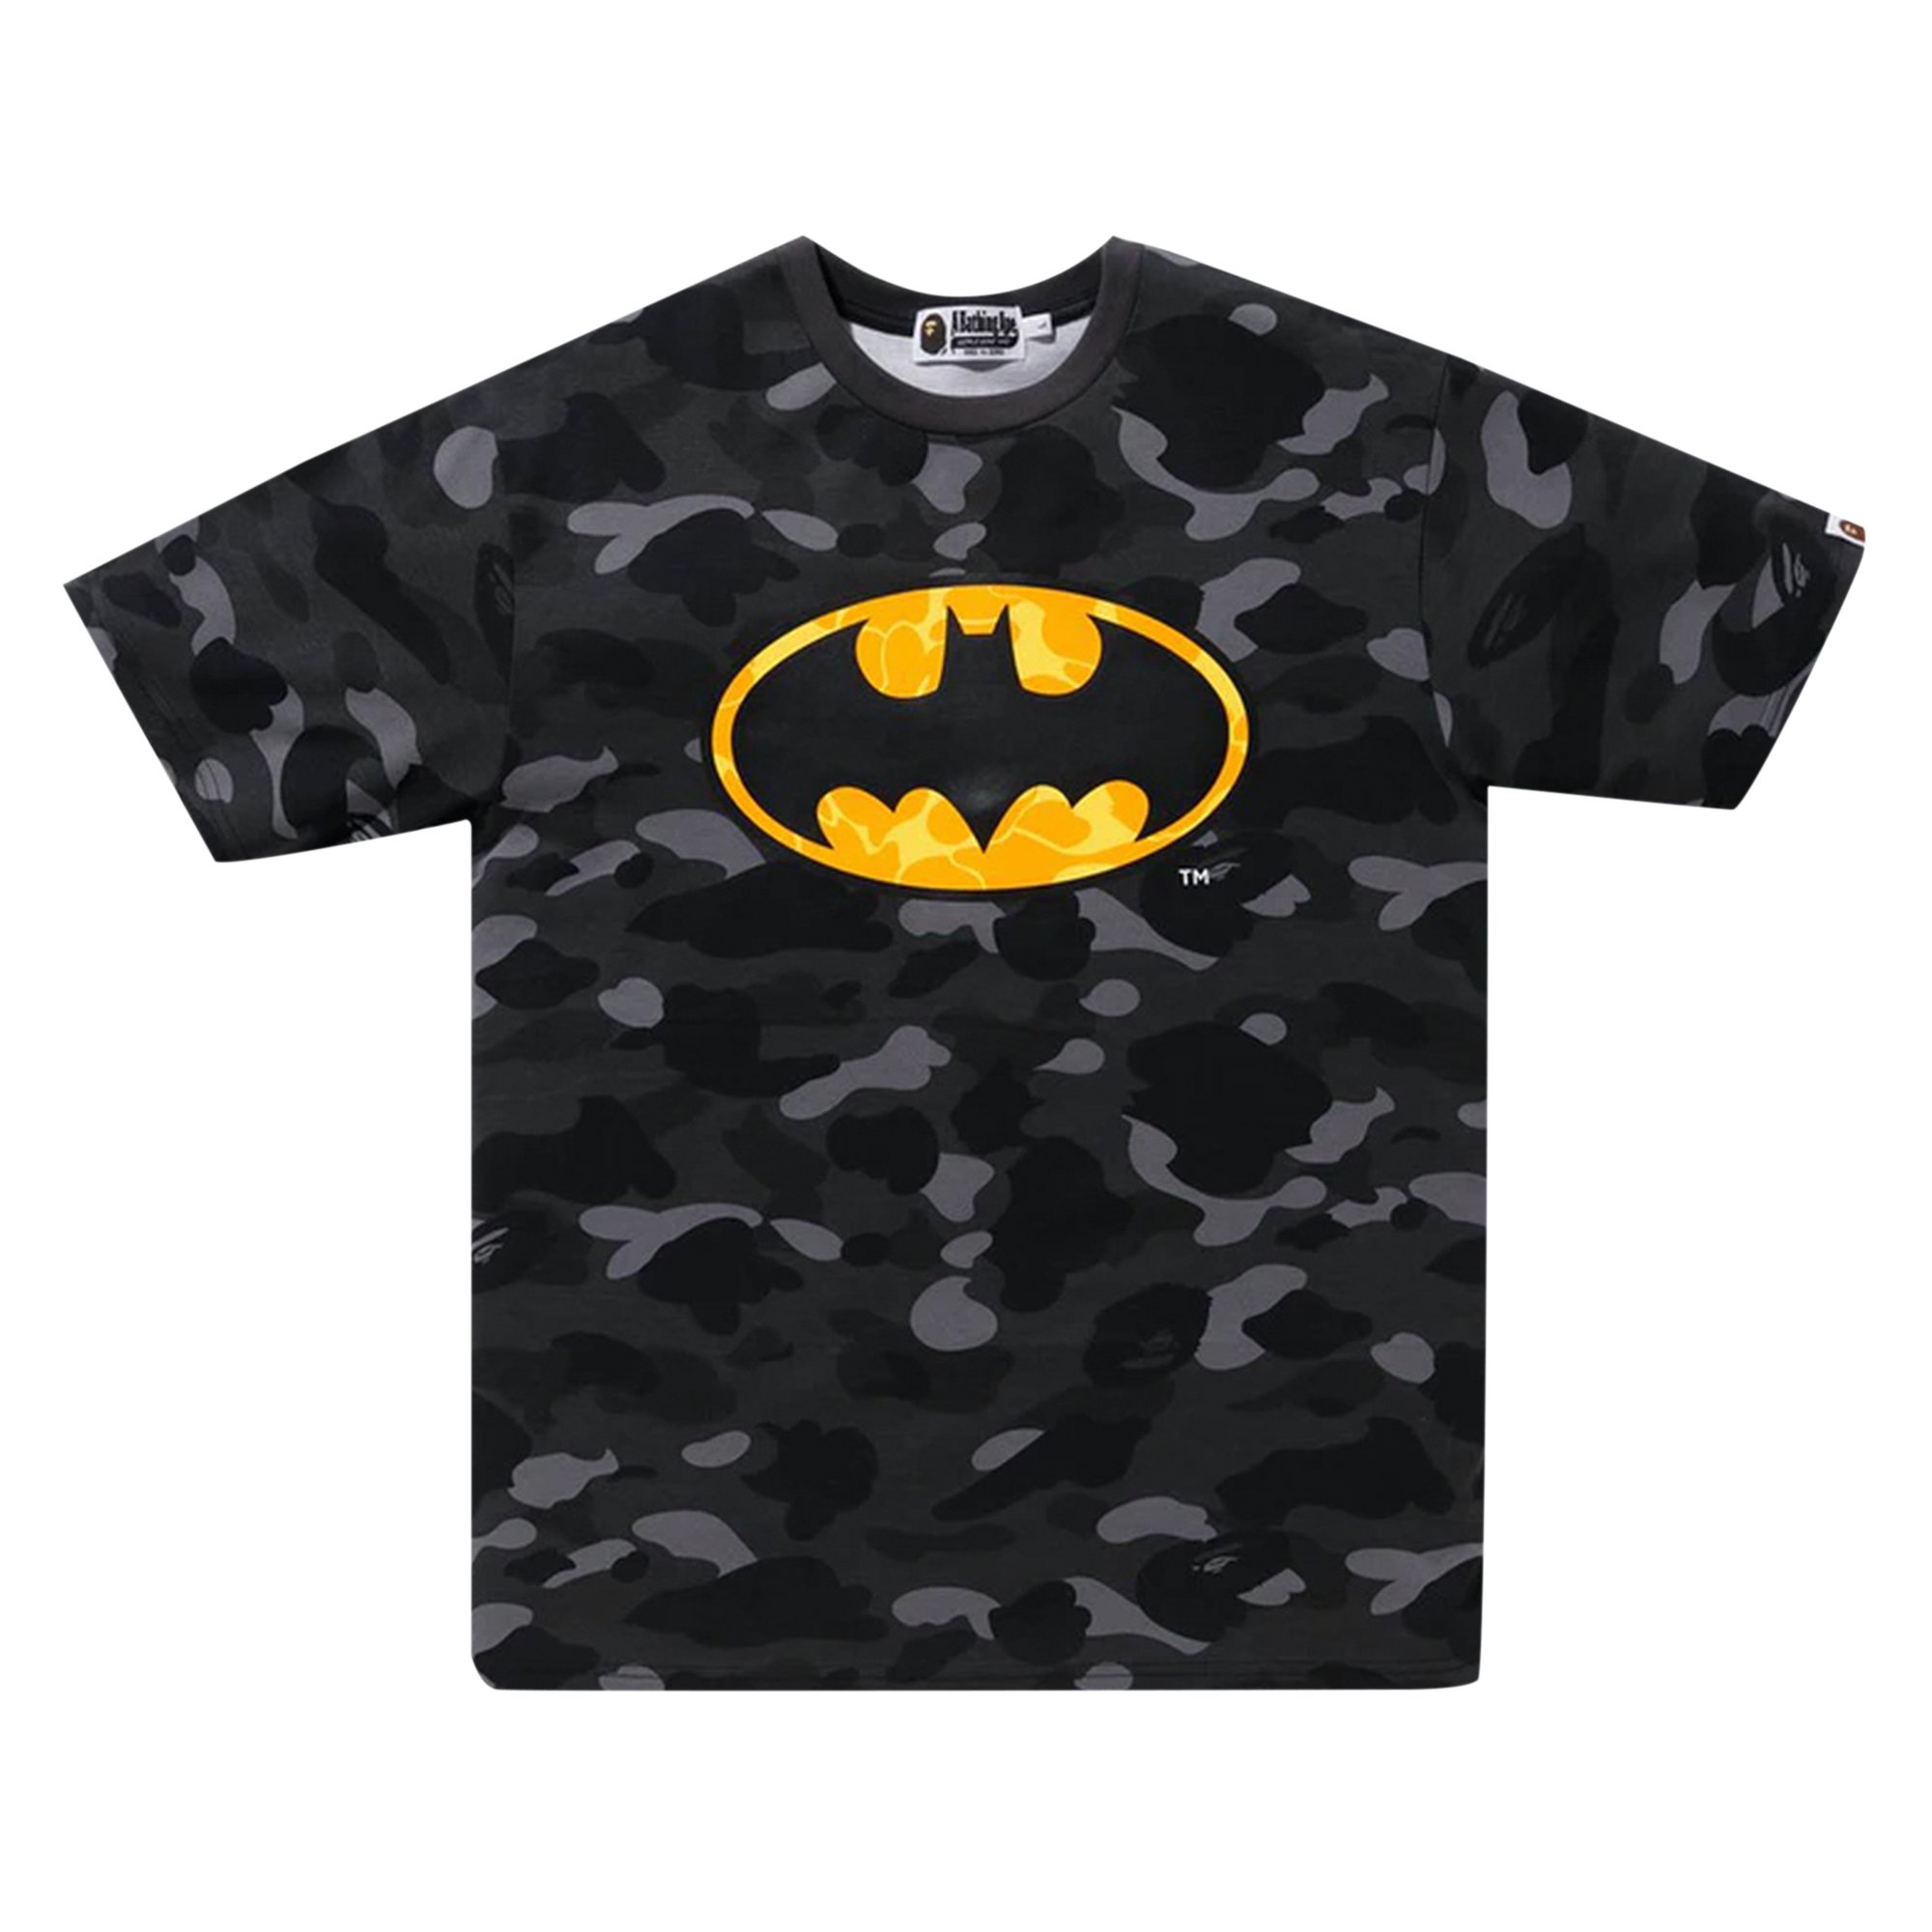 Buy BAPE x DC Batman Color Camo Tee 'Black' - 1H23 109 908 BLACK